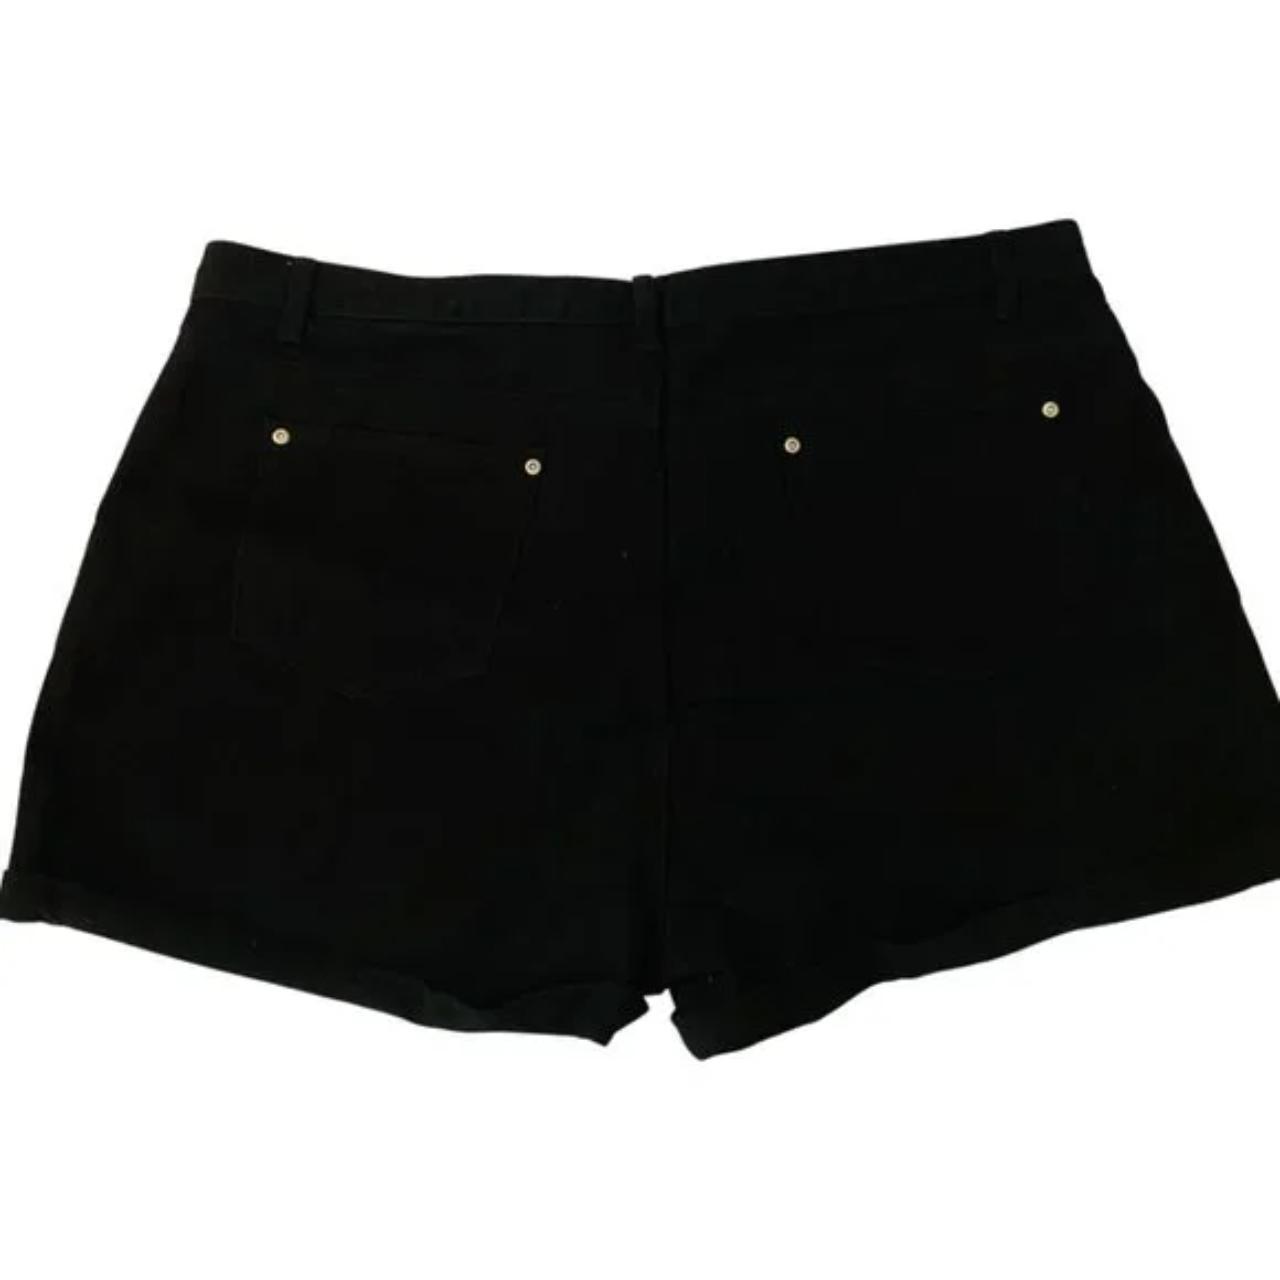 I Saw It First Women's Black Shorts (2)